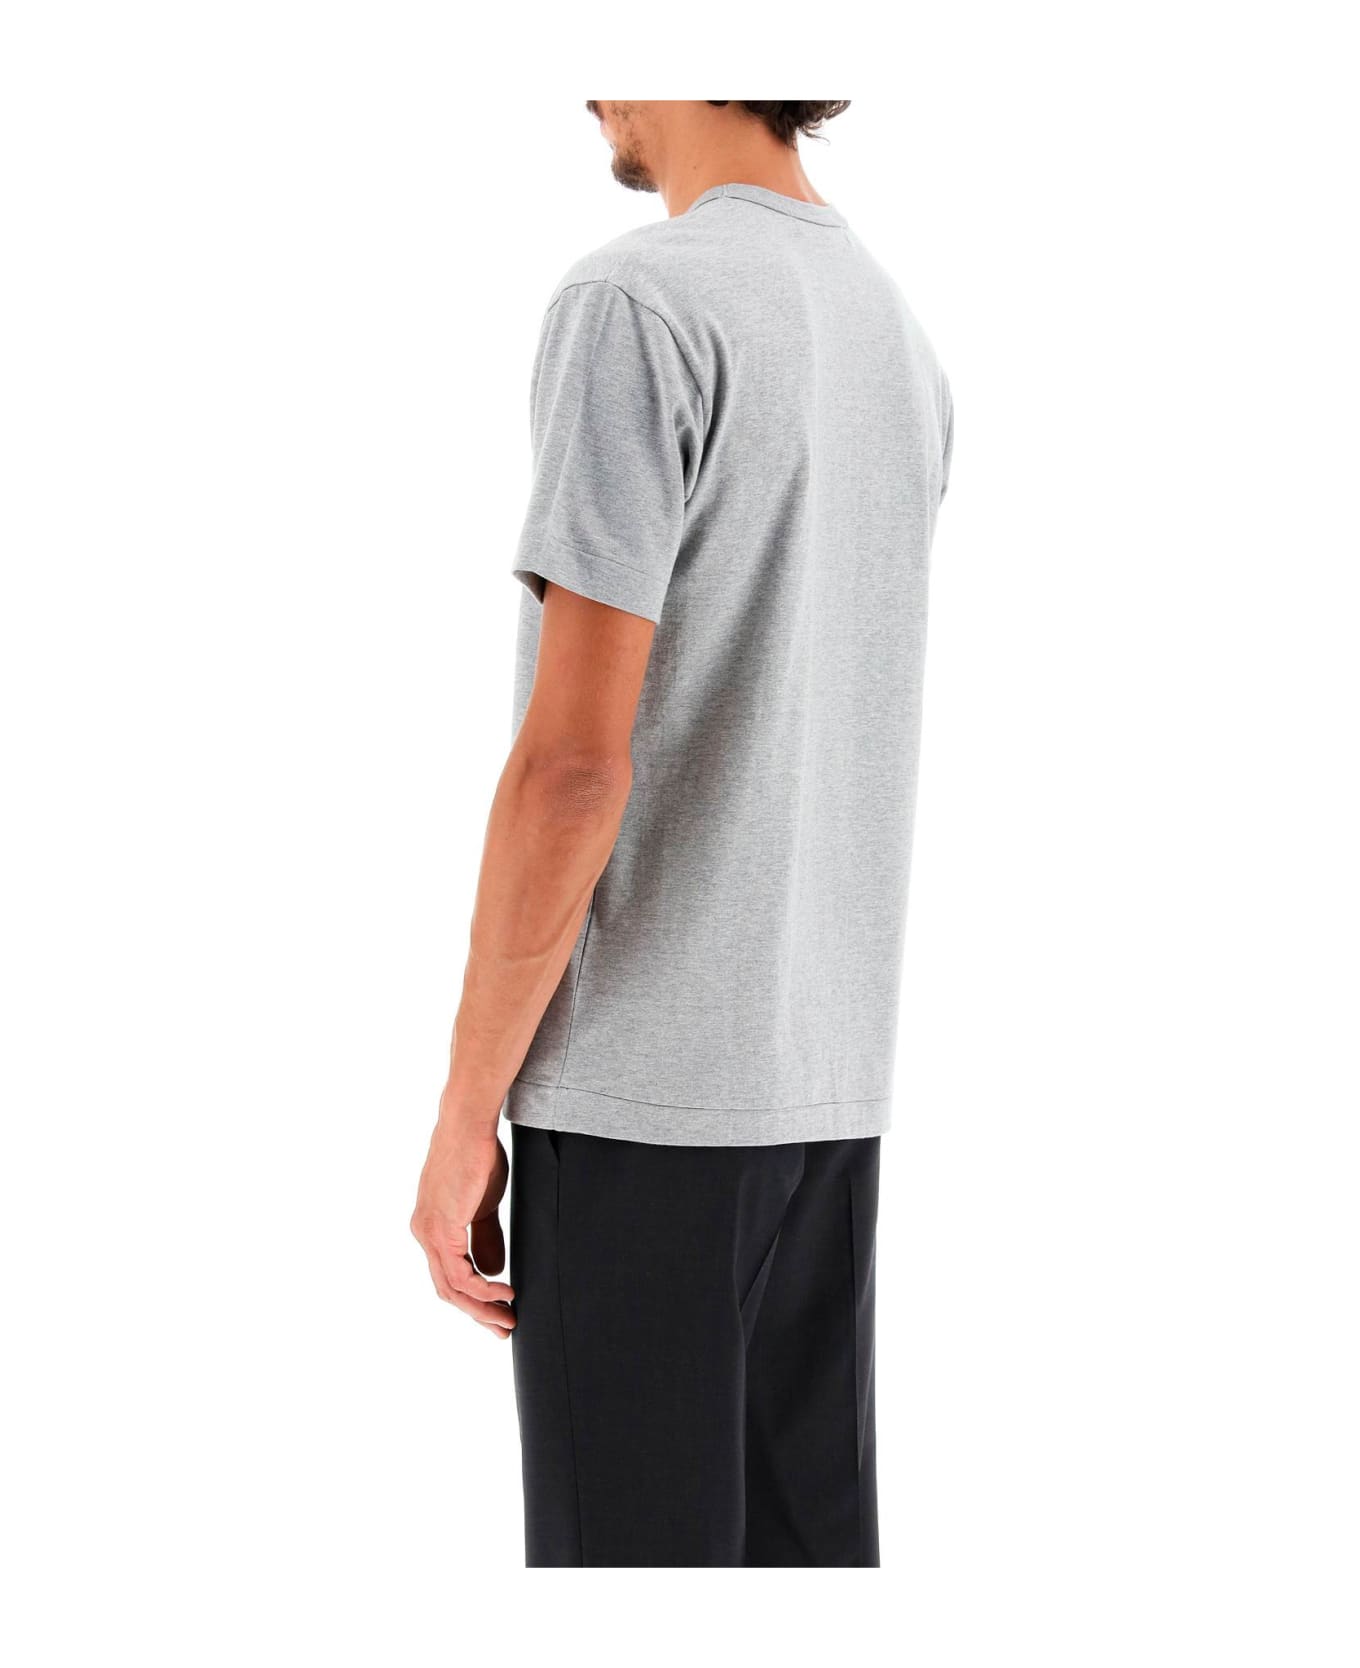 Comme des Garçons Play T-shirt With Play Print - GREY (Grey)